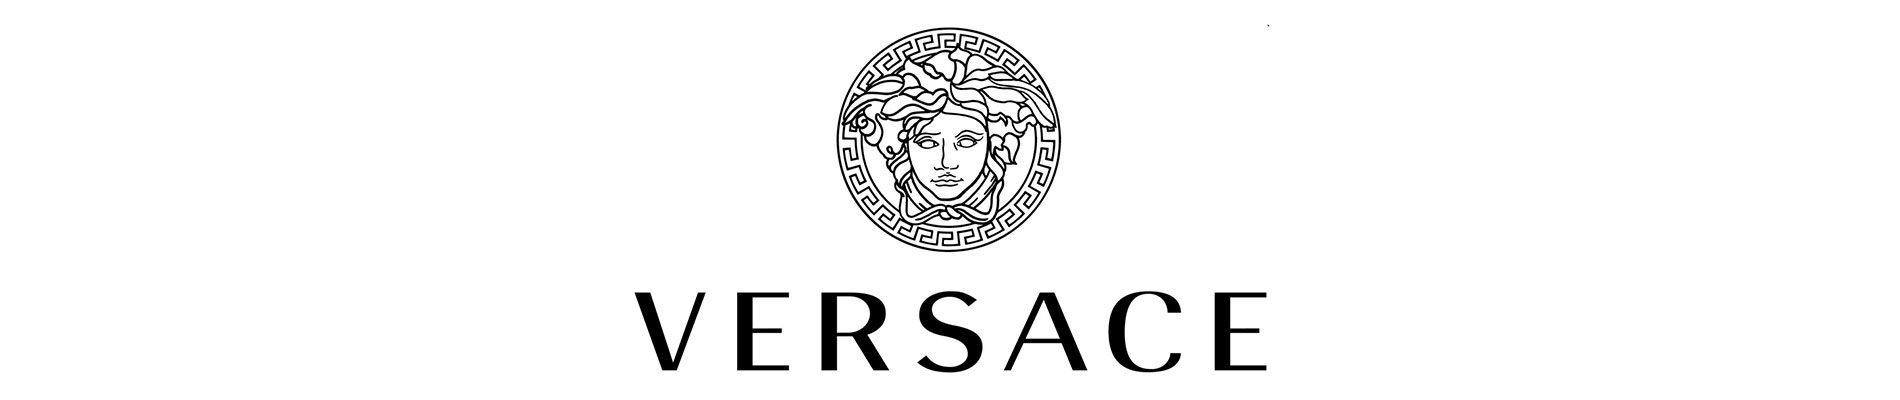 versace designer frames header logo